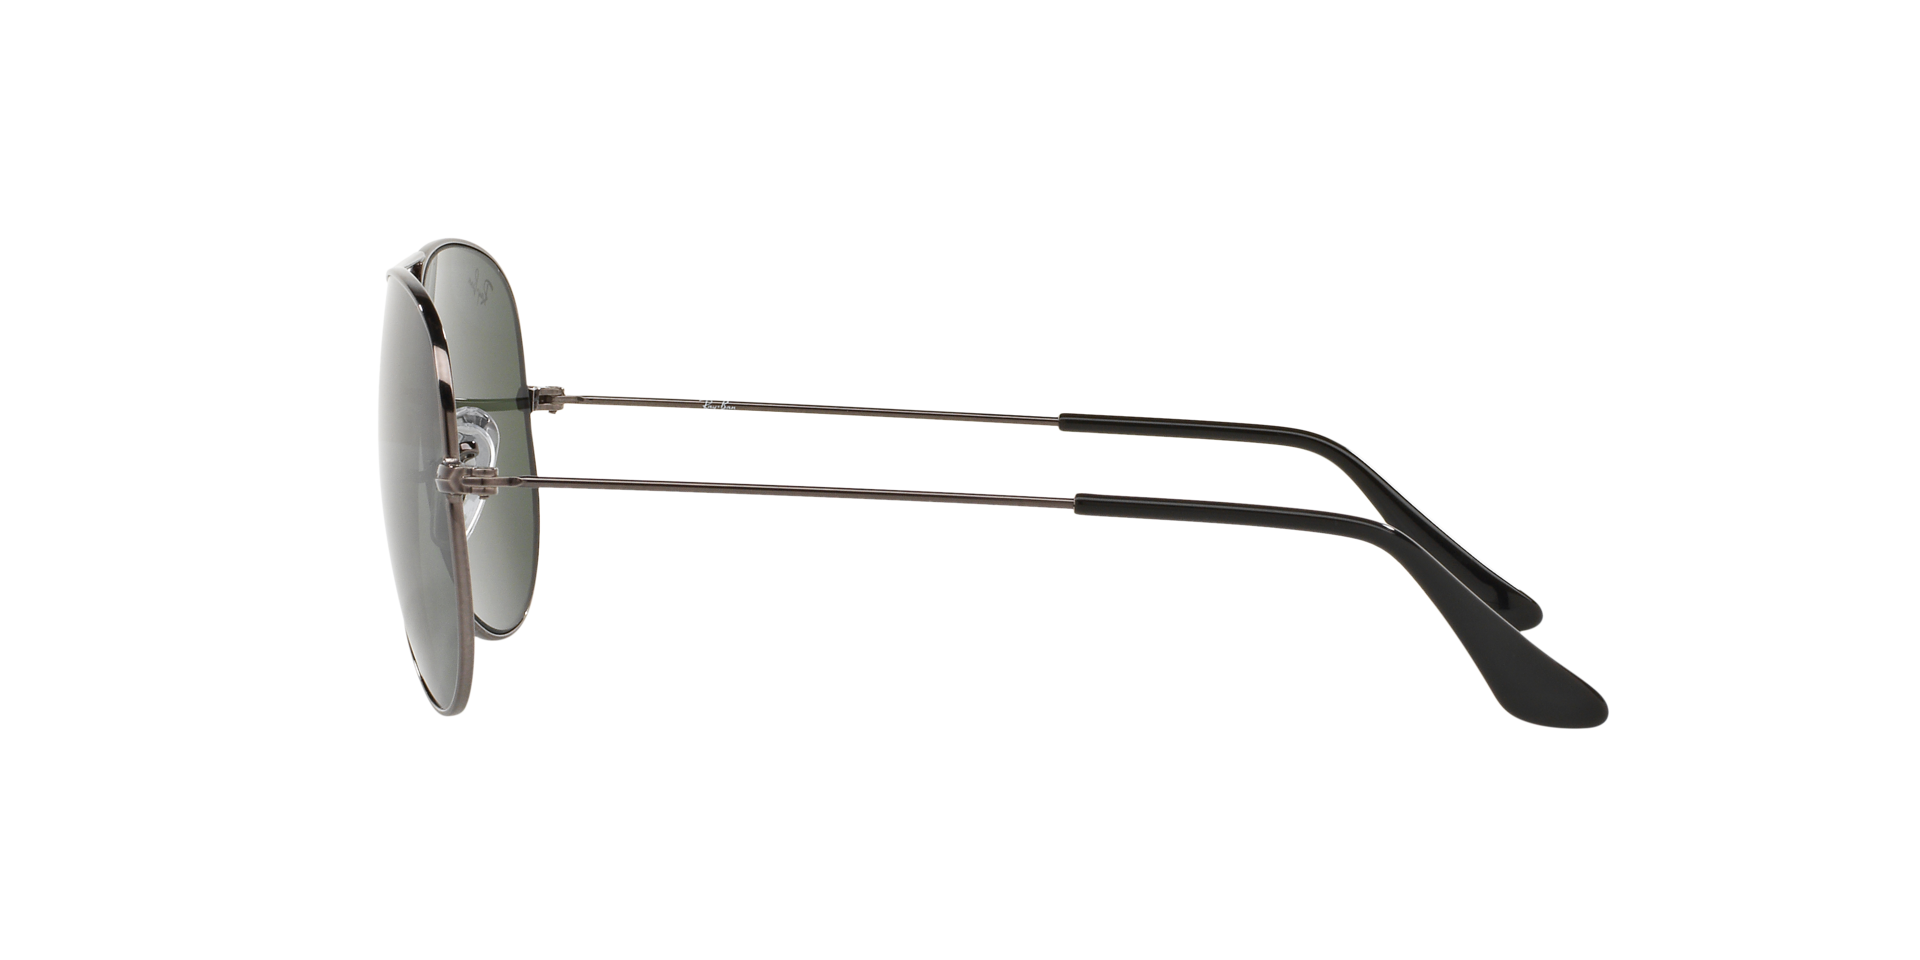 Buy Ray-Ban Aviator Classic Sunglasses Online.